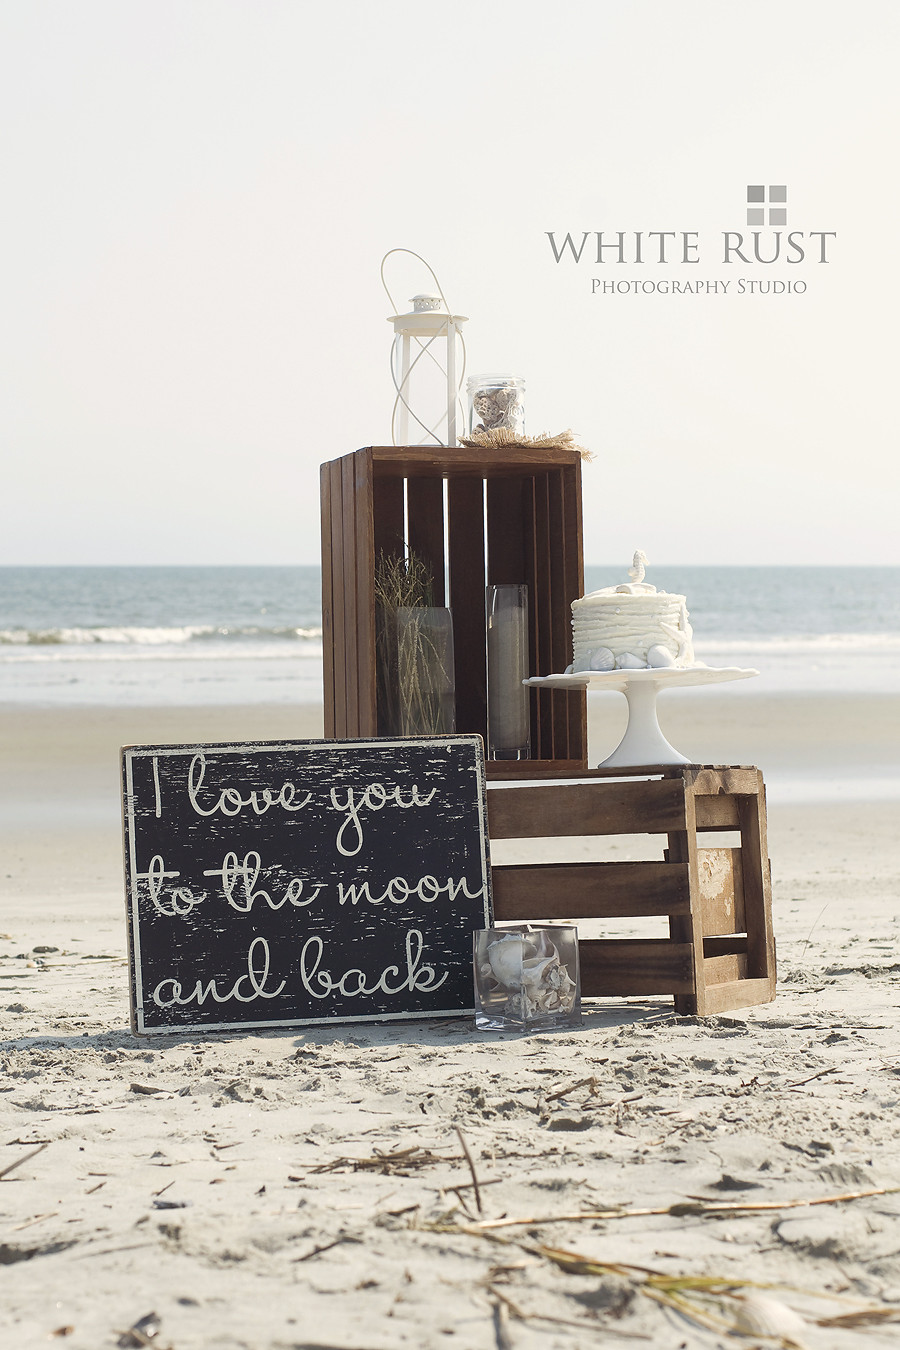 Best ideas about DIY Beach Wedding Ideas
. Save or Pin 40 DIY Beach Wedding Ideas Perfect For A Destination Now.